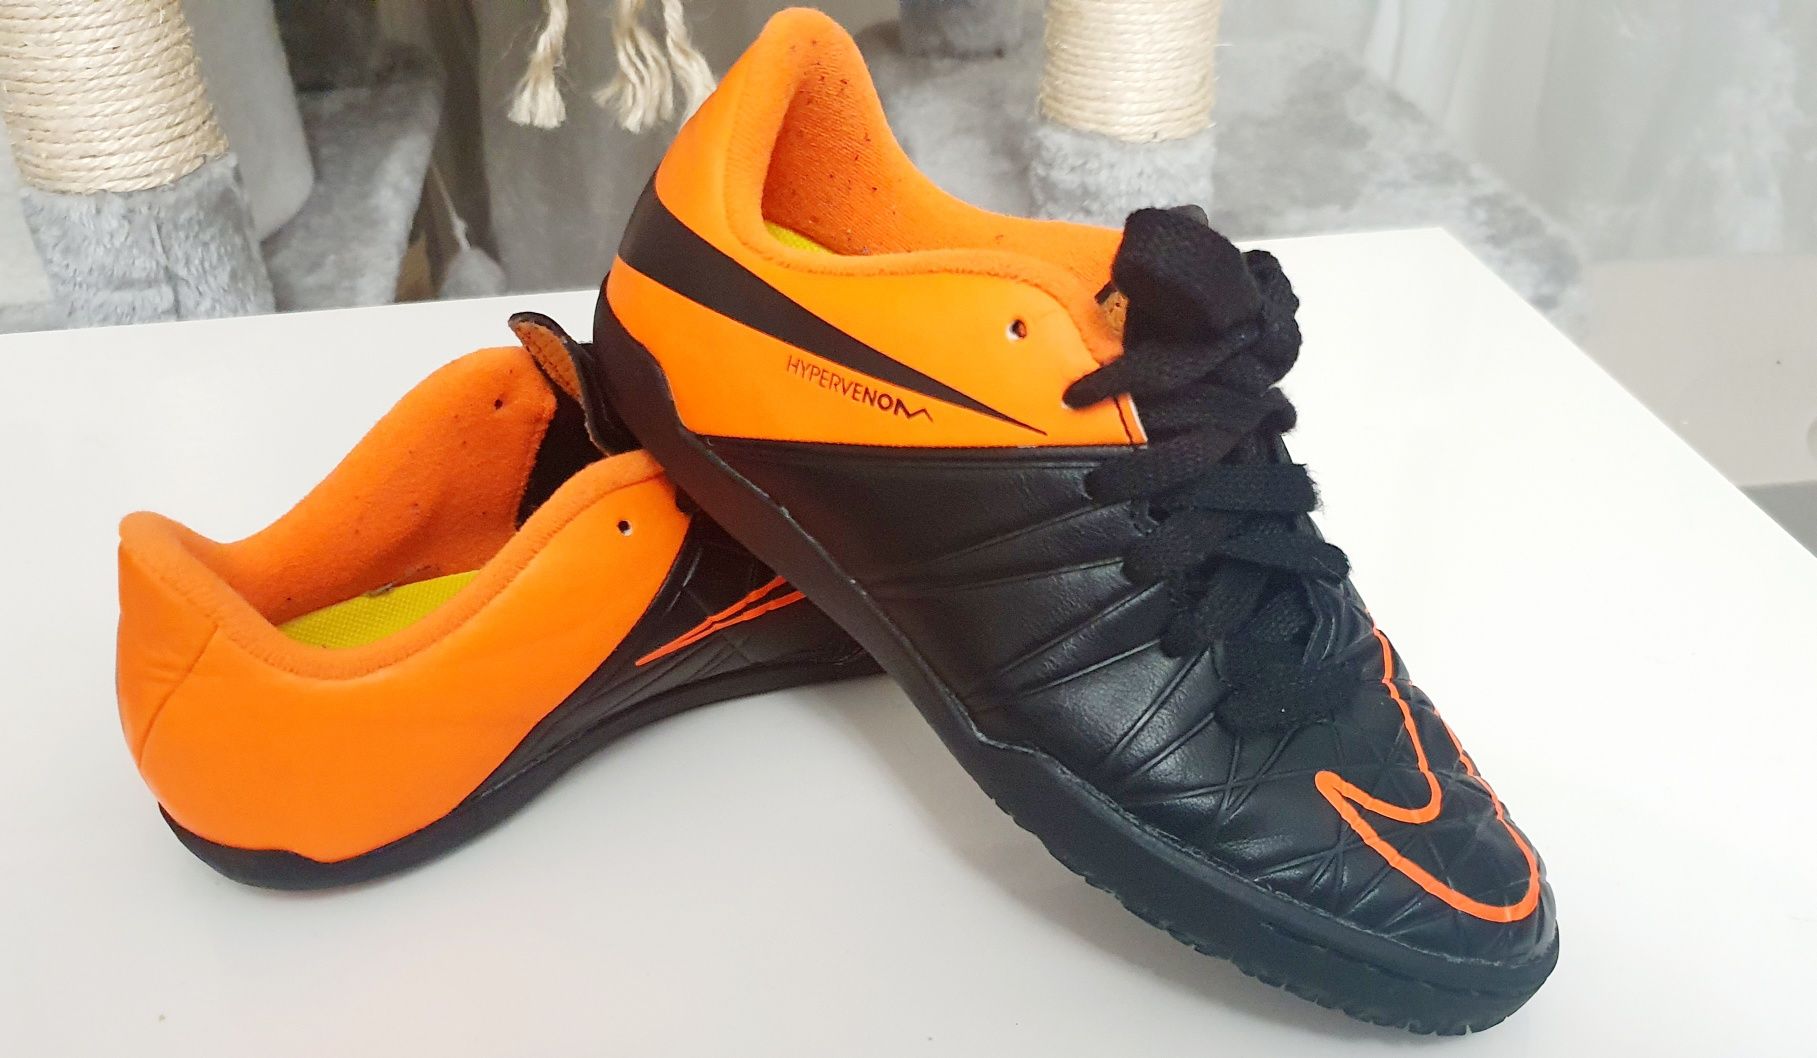 Adidas Nike Mercurial Hypervenom Phelon originali 35 ghete fotbal sala